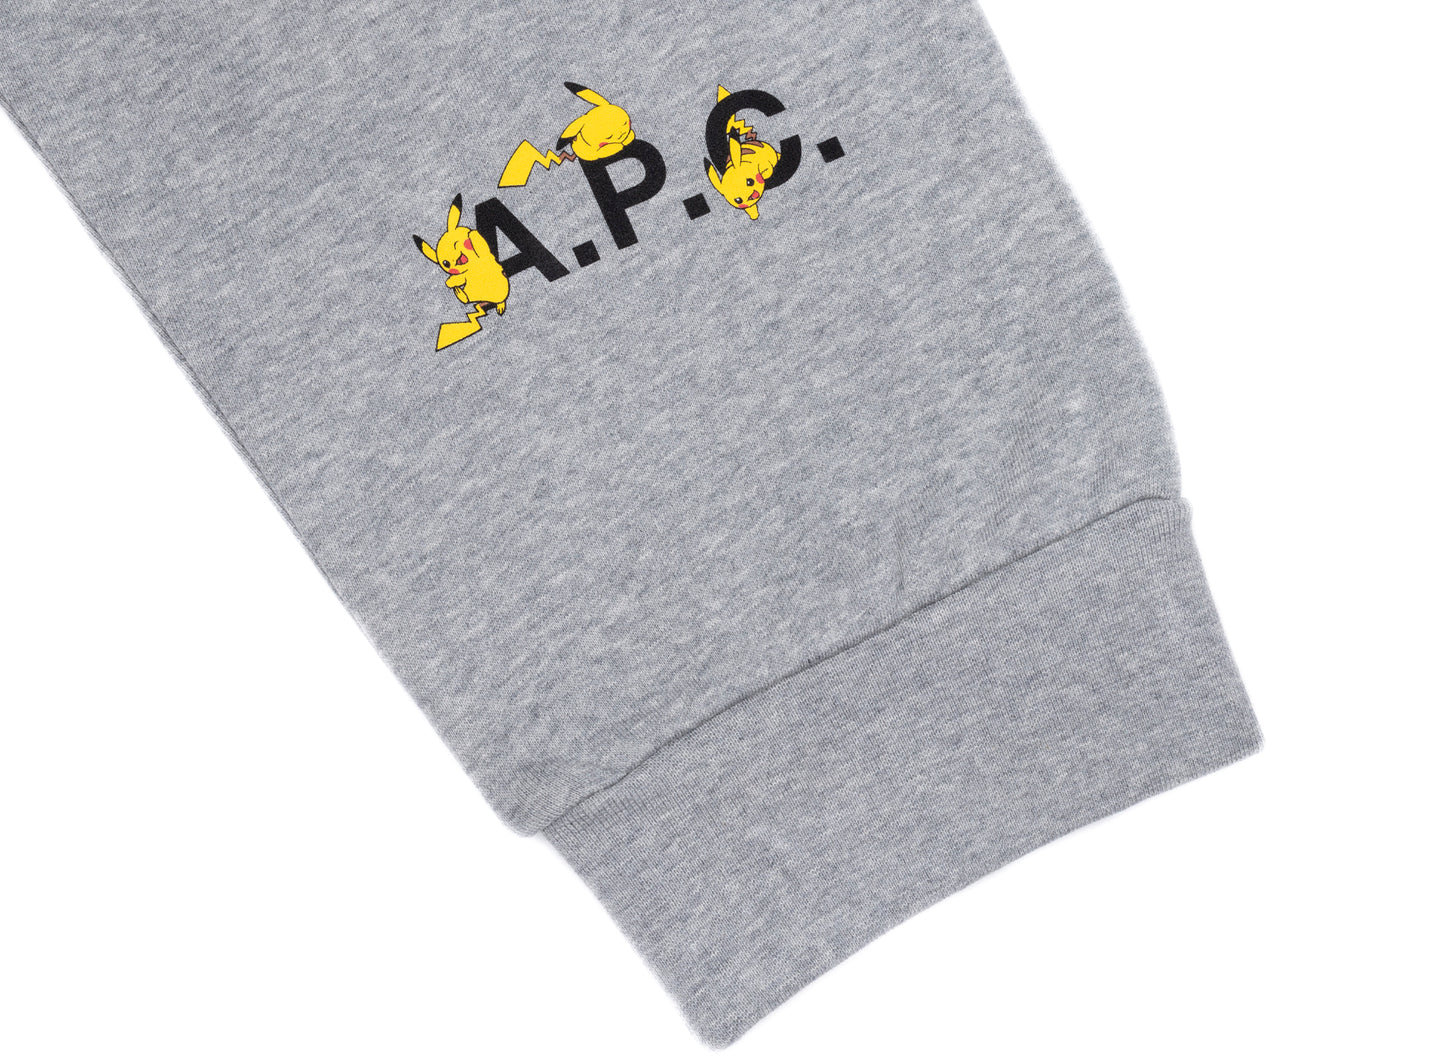 A.P.C. x Pokemon Pikachu H Joggers in Grey